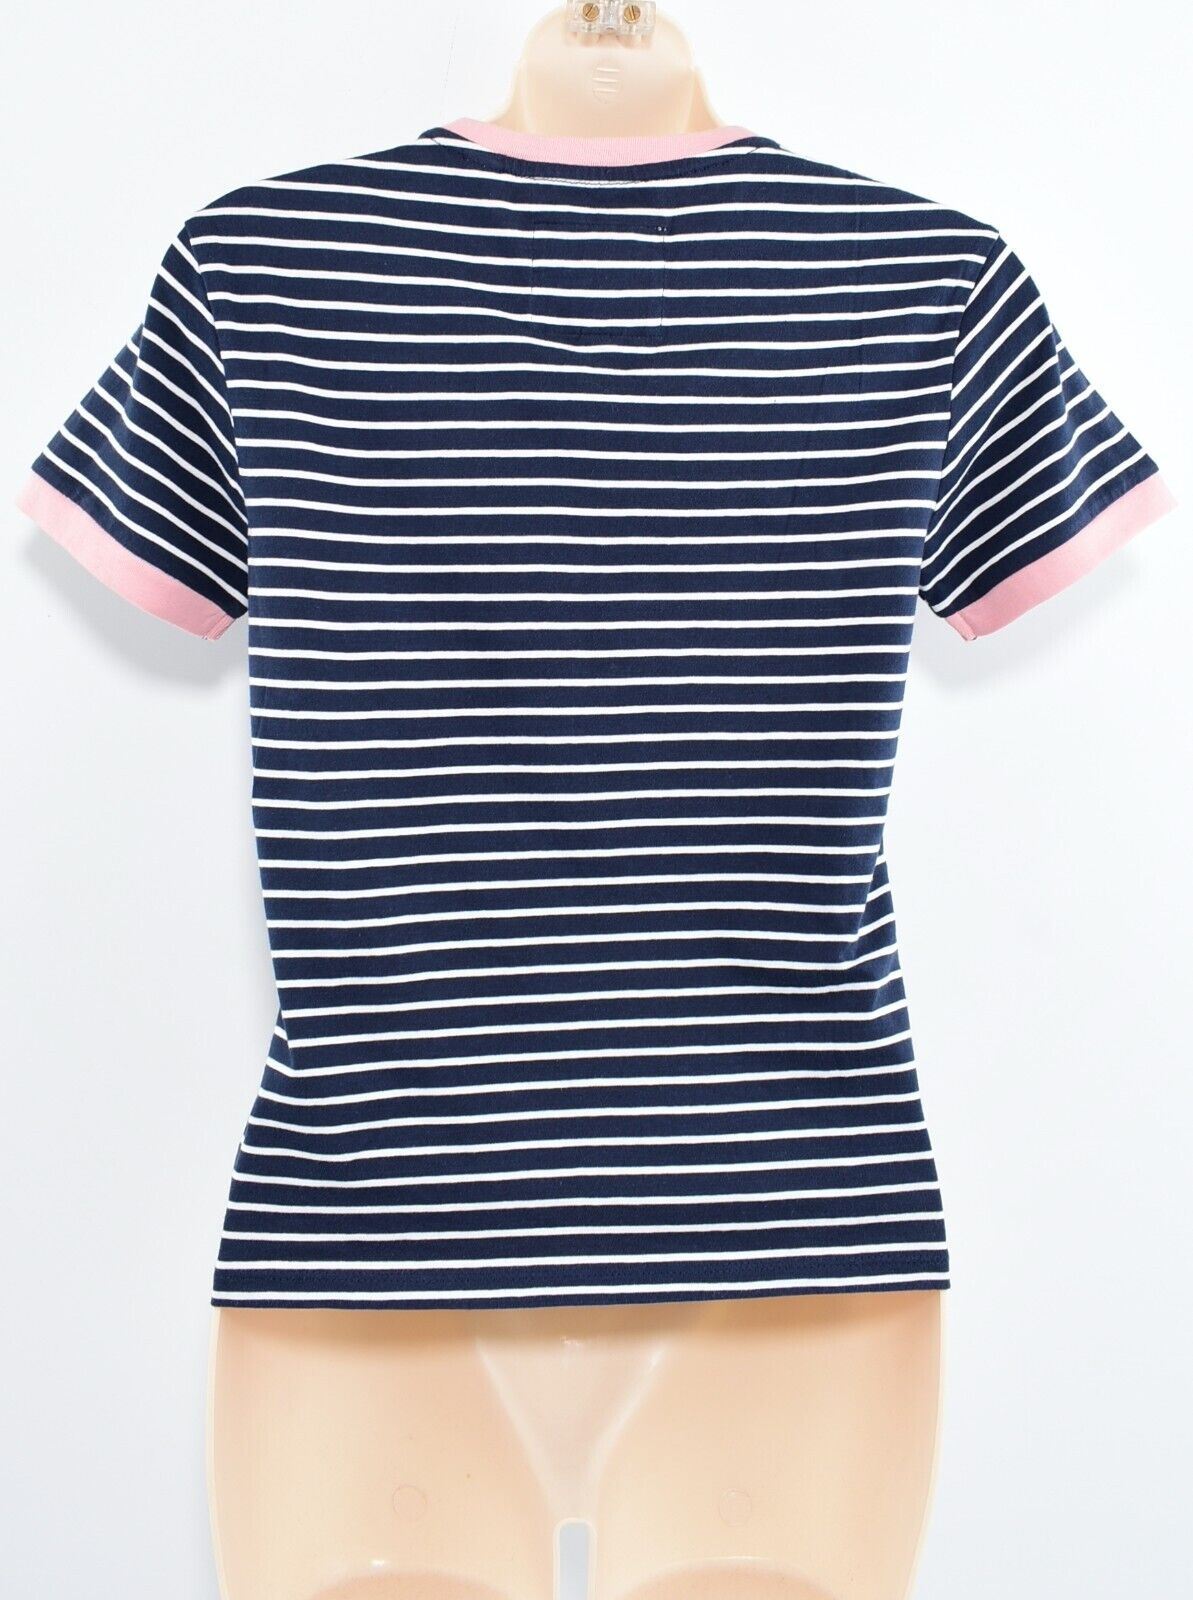 JACK WILLS Womens Short Sleeve Striped T-shirt, Blue/White/Pink, size UK 8